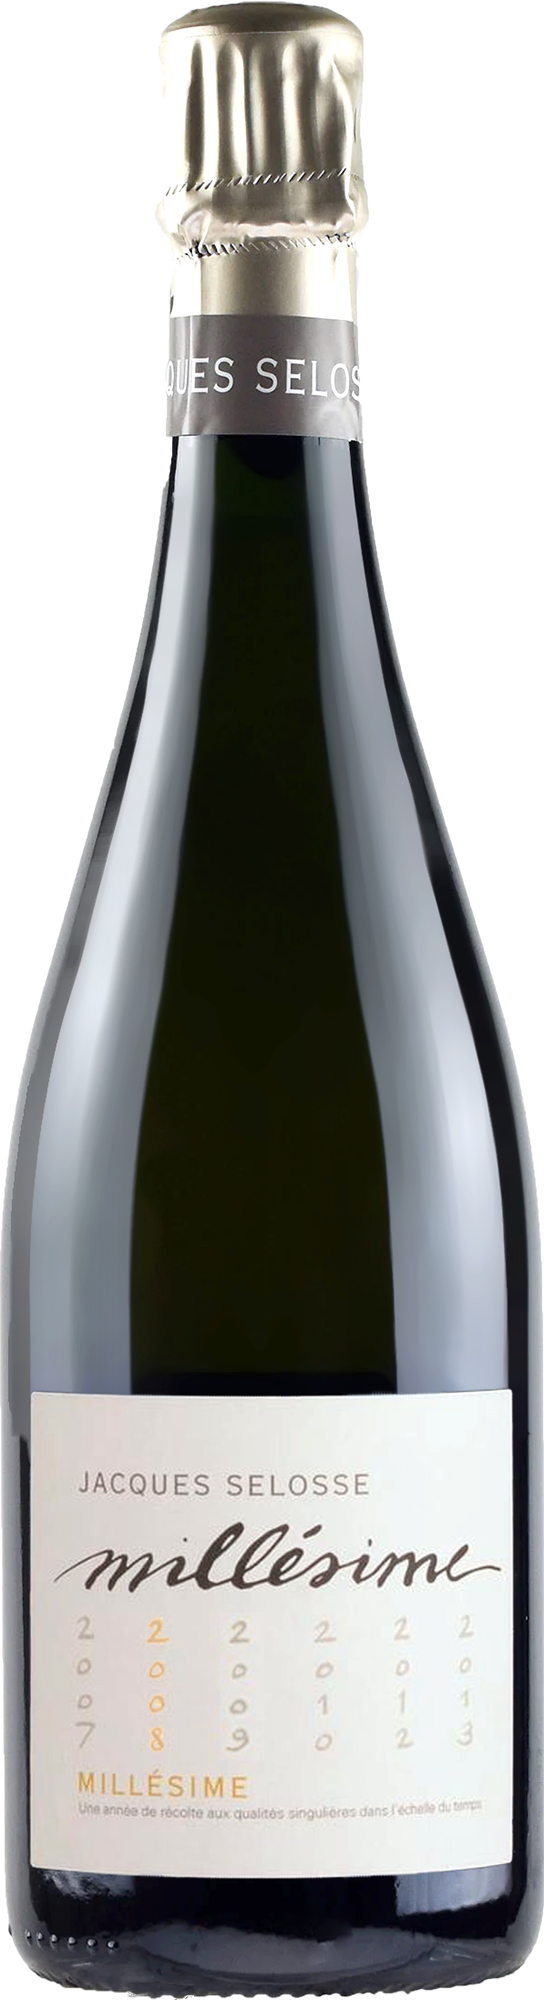 Champagne Jacques Selosse Grand Cru Millésime 2010 (Disg. Mar 2021)